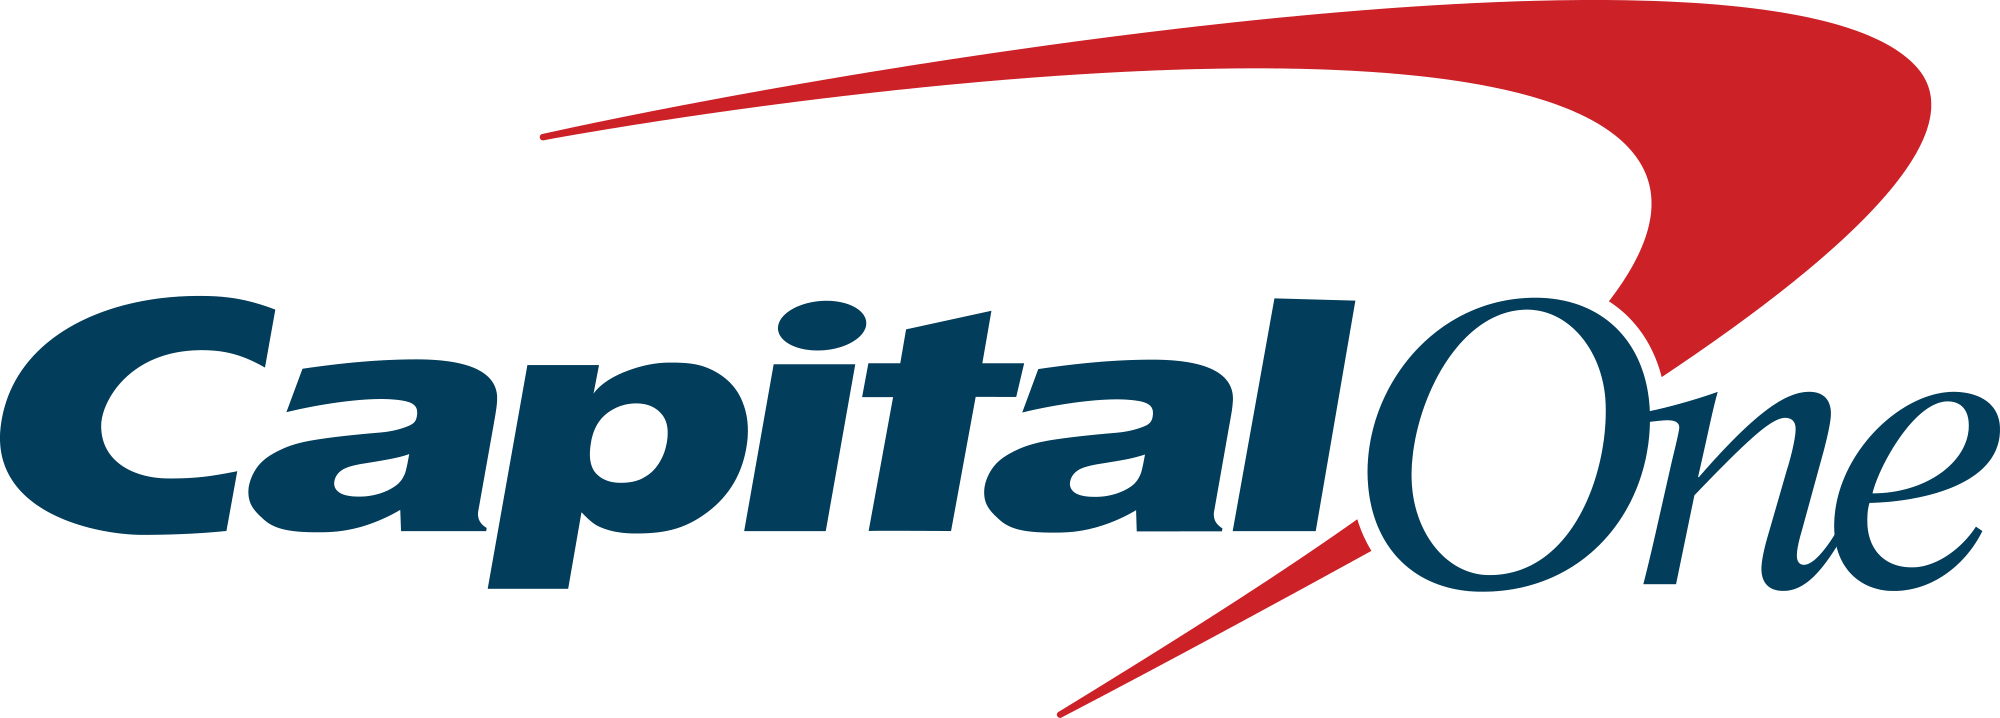 Capital One Financial Corporation Company Logo